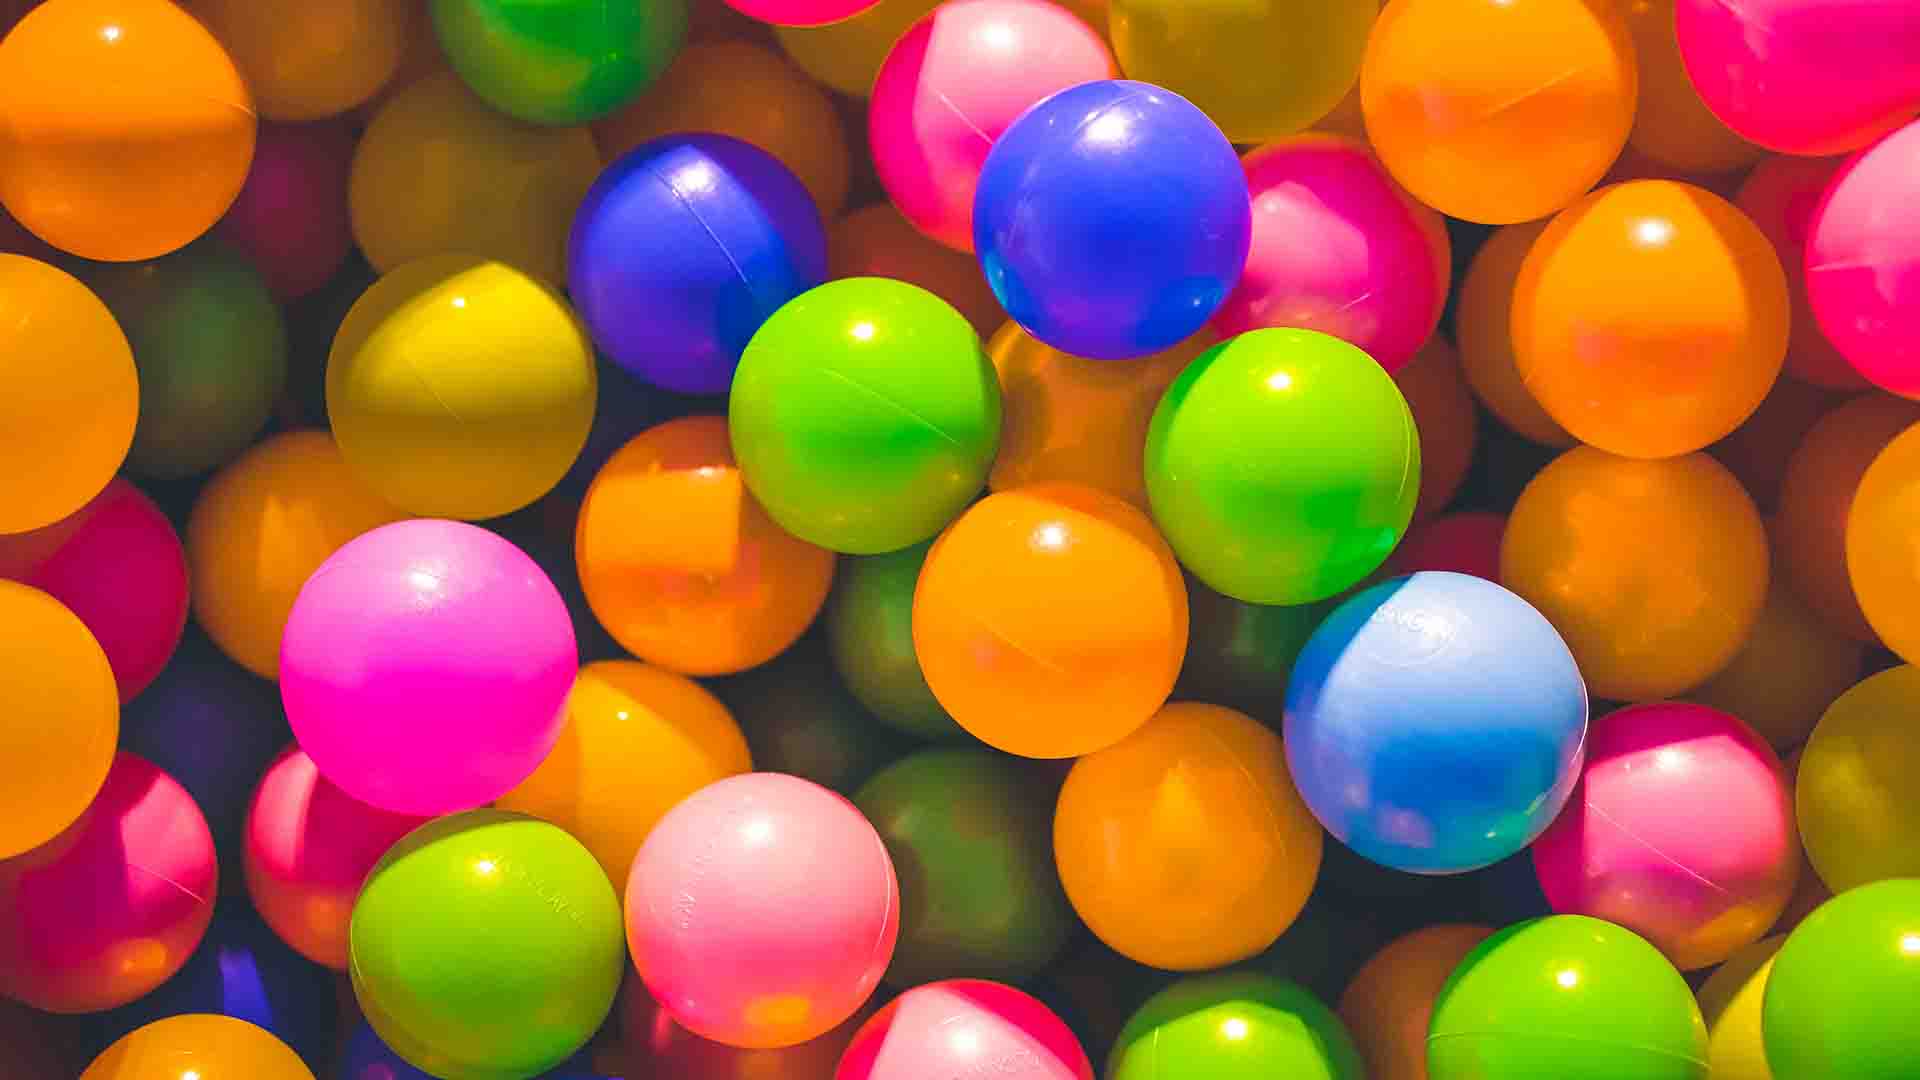 Different colored plastic balls